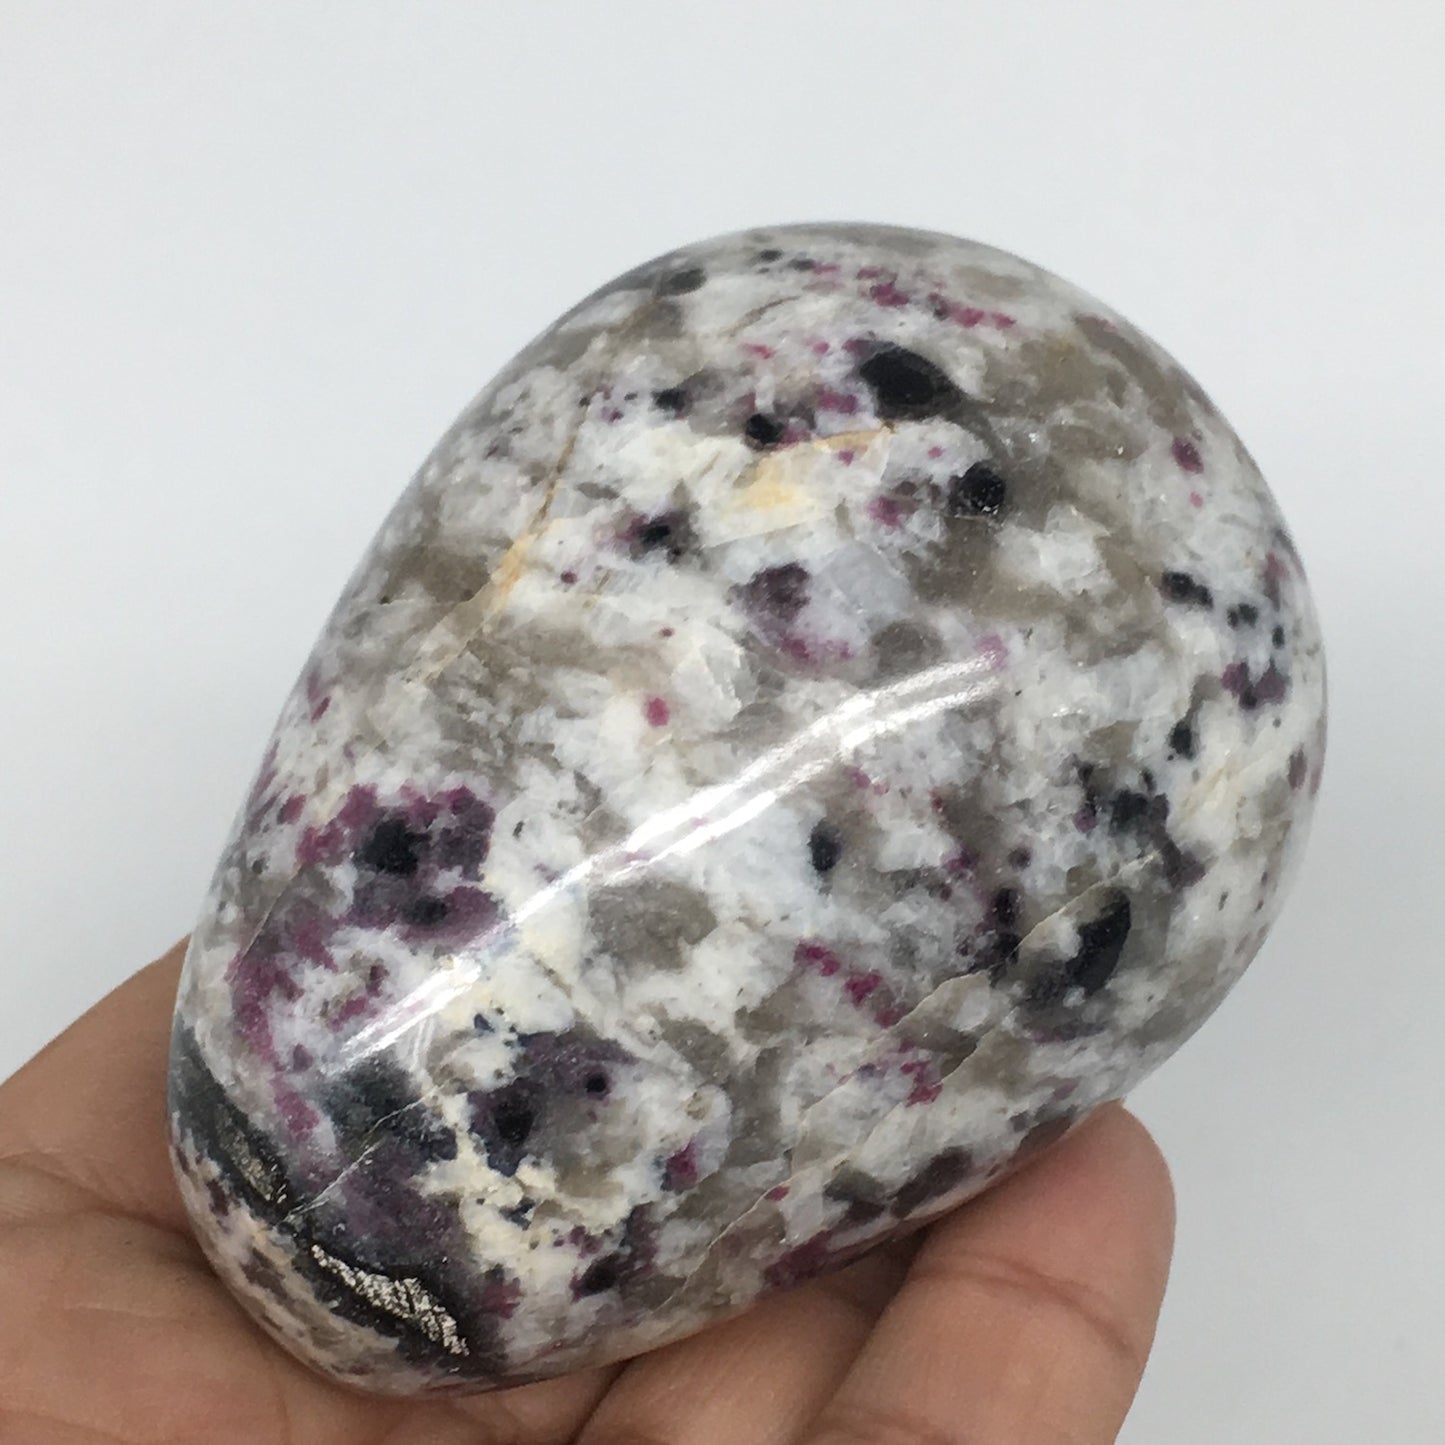 319.6g, 3"x2.2" Tourmaline Rubellite Egg Crystal Reiki Energy @Madagascar,B140